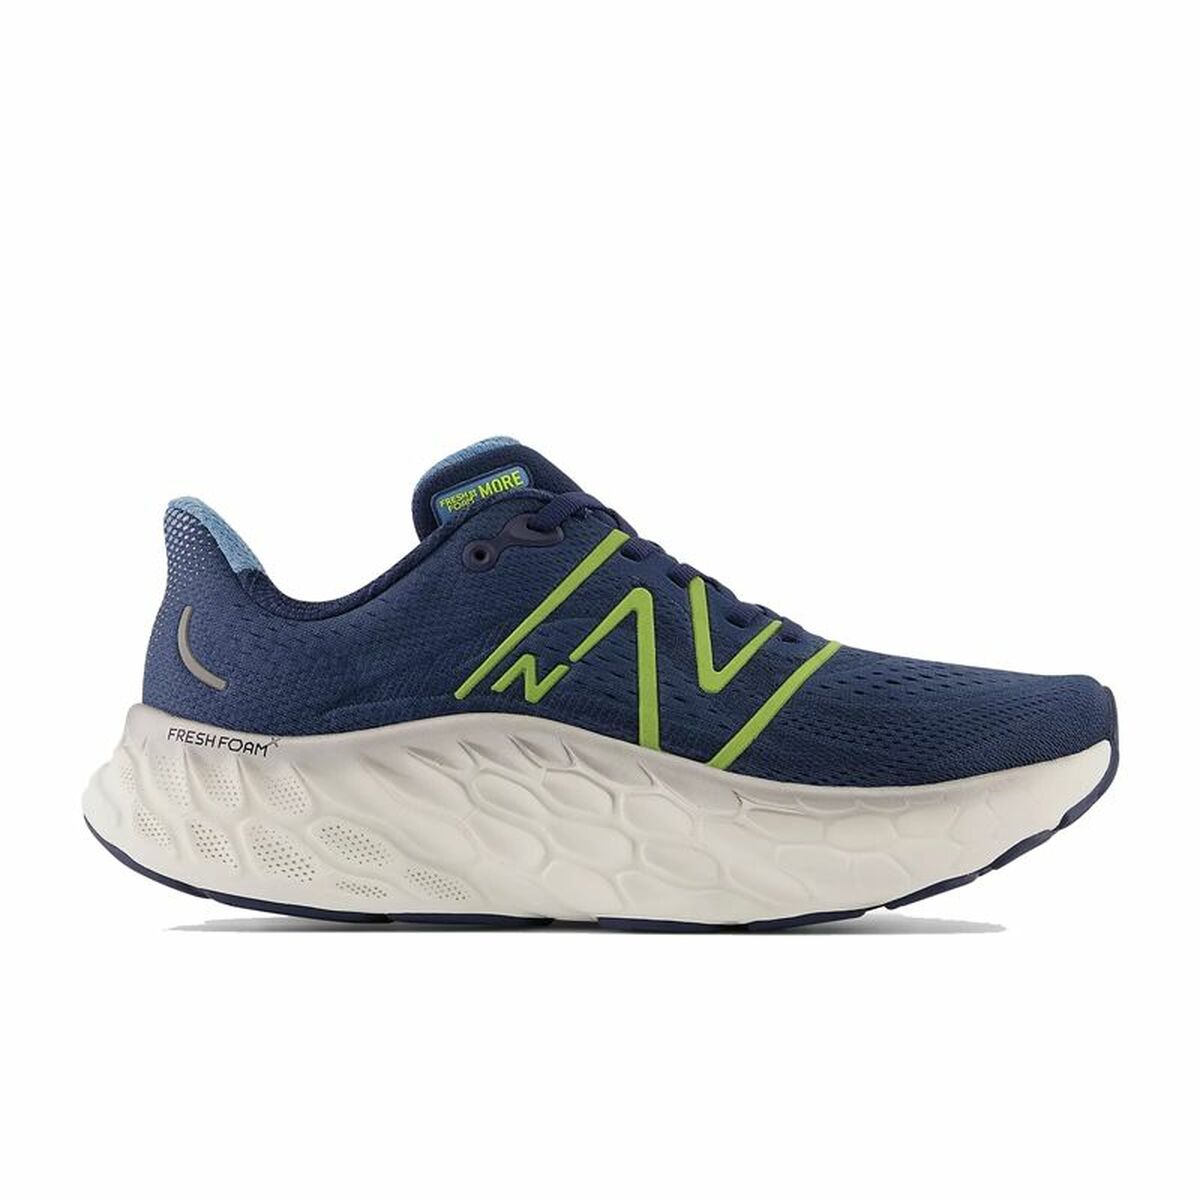 Chaussures de Running pour Adultes New Balance Fresh Foam X Bleu Bleu foncé Homme